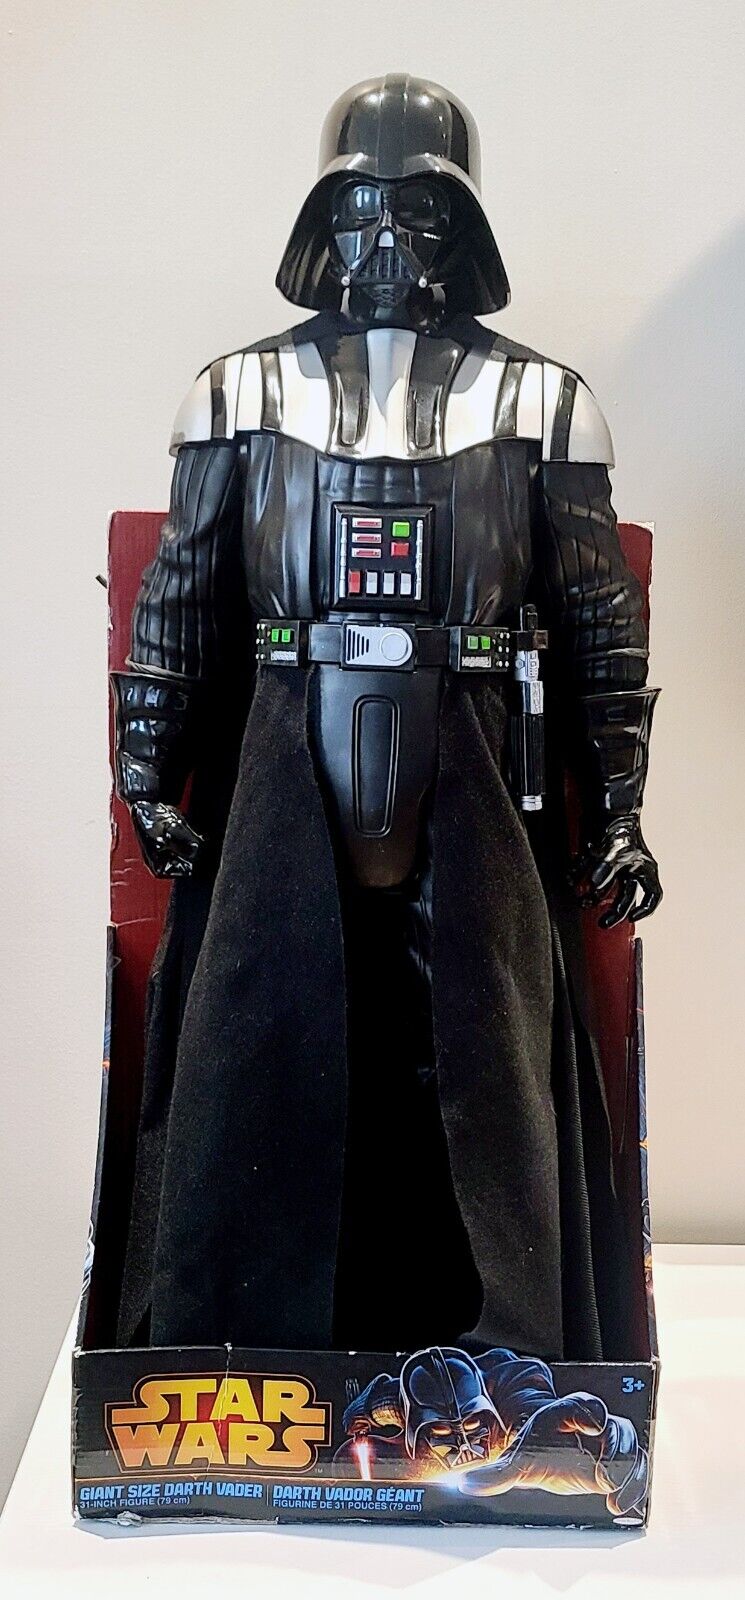 2013 Star Wars Jakks Pacific LucasFilms Darth Vader Last Edition (11 Years Old)